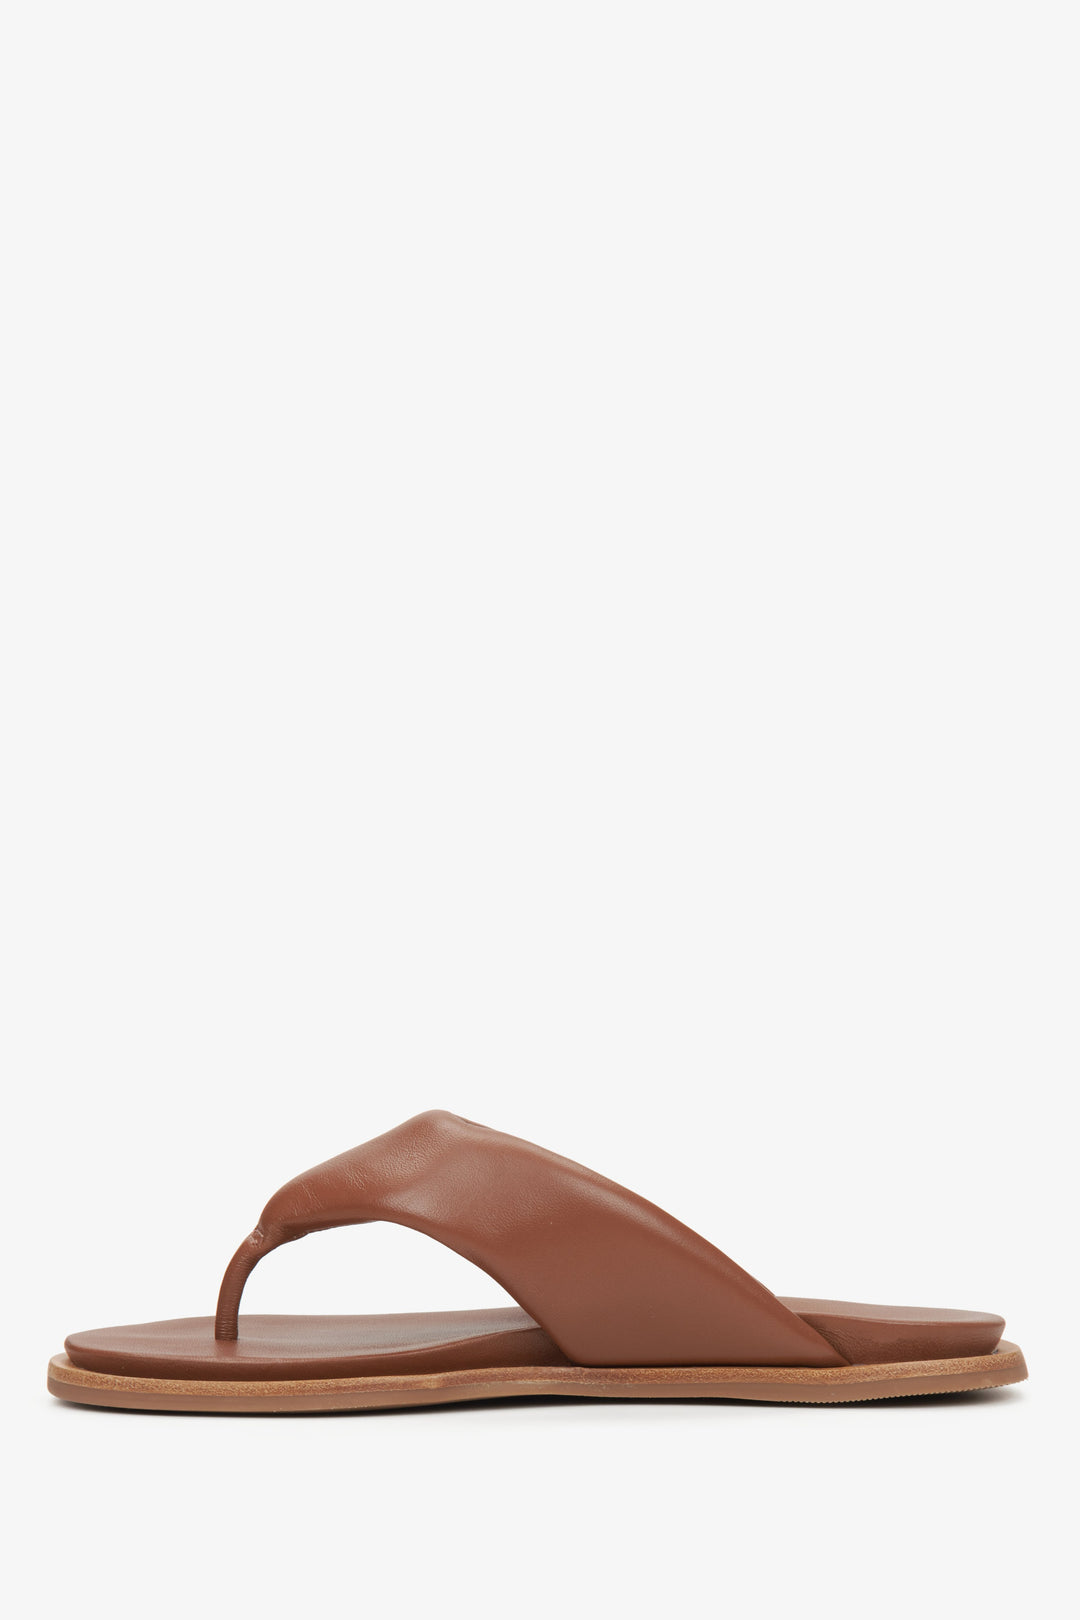 Women's brown leather slide sandals Estro - shoe profile.